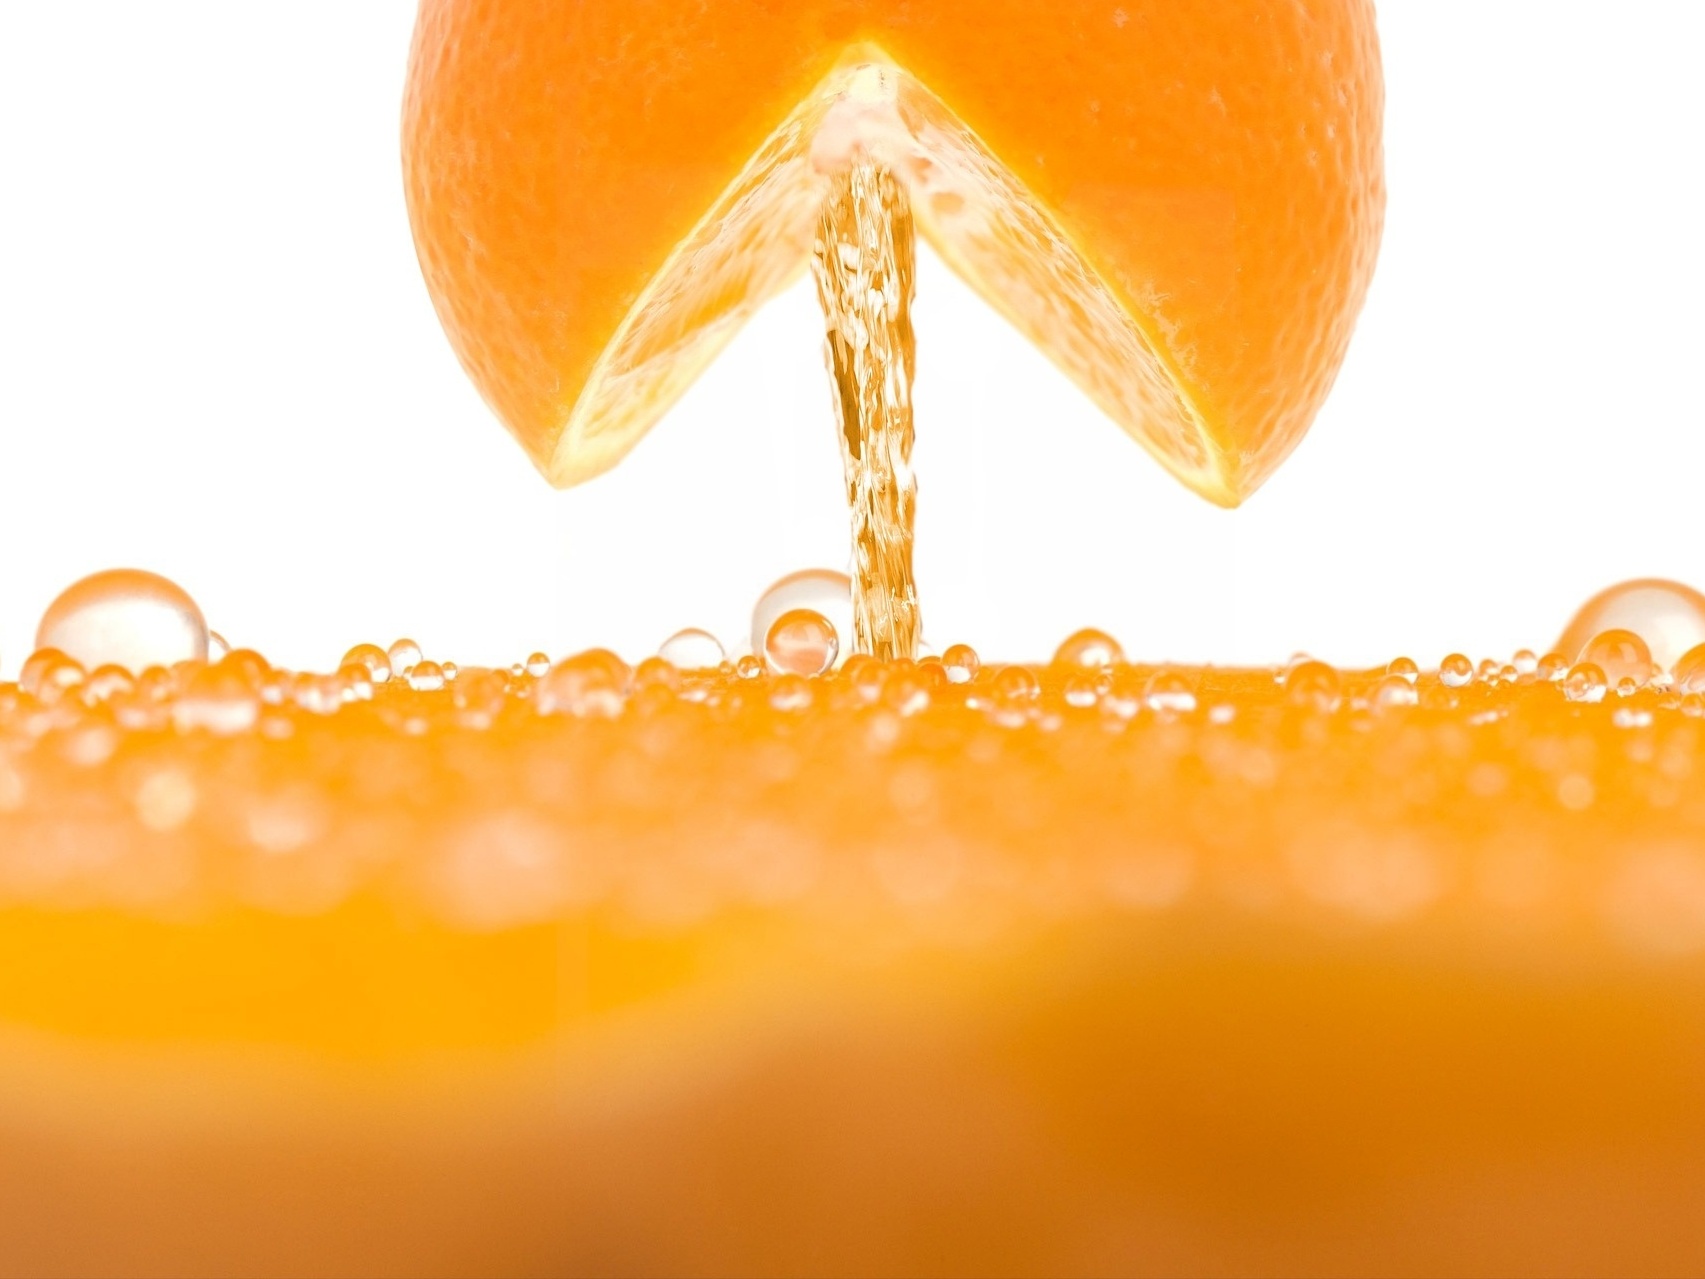 Falta de laranjas pressiona indústria de sucos a lançar sabores misturados